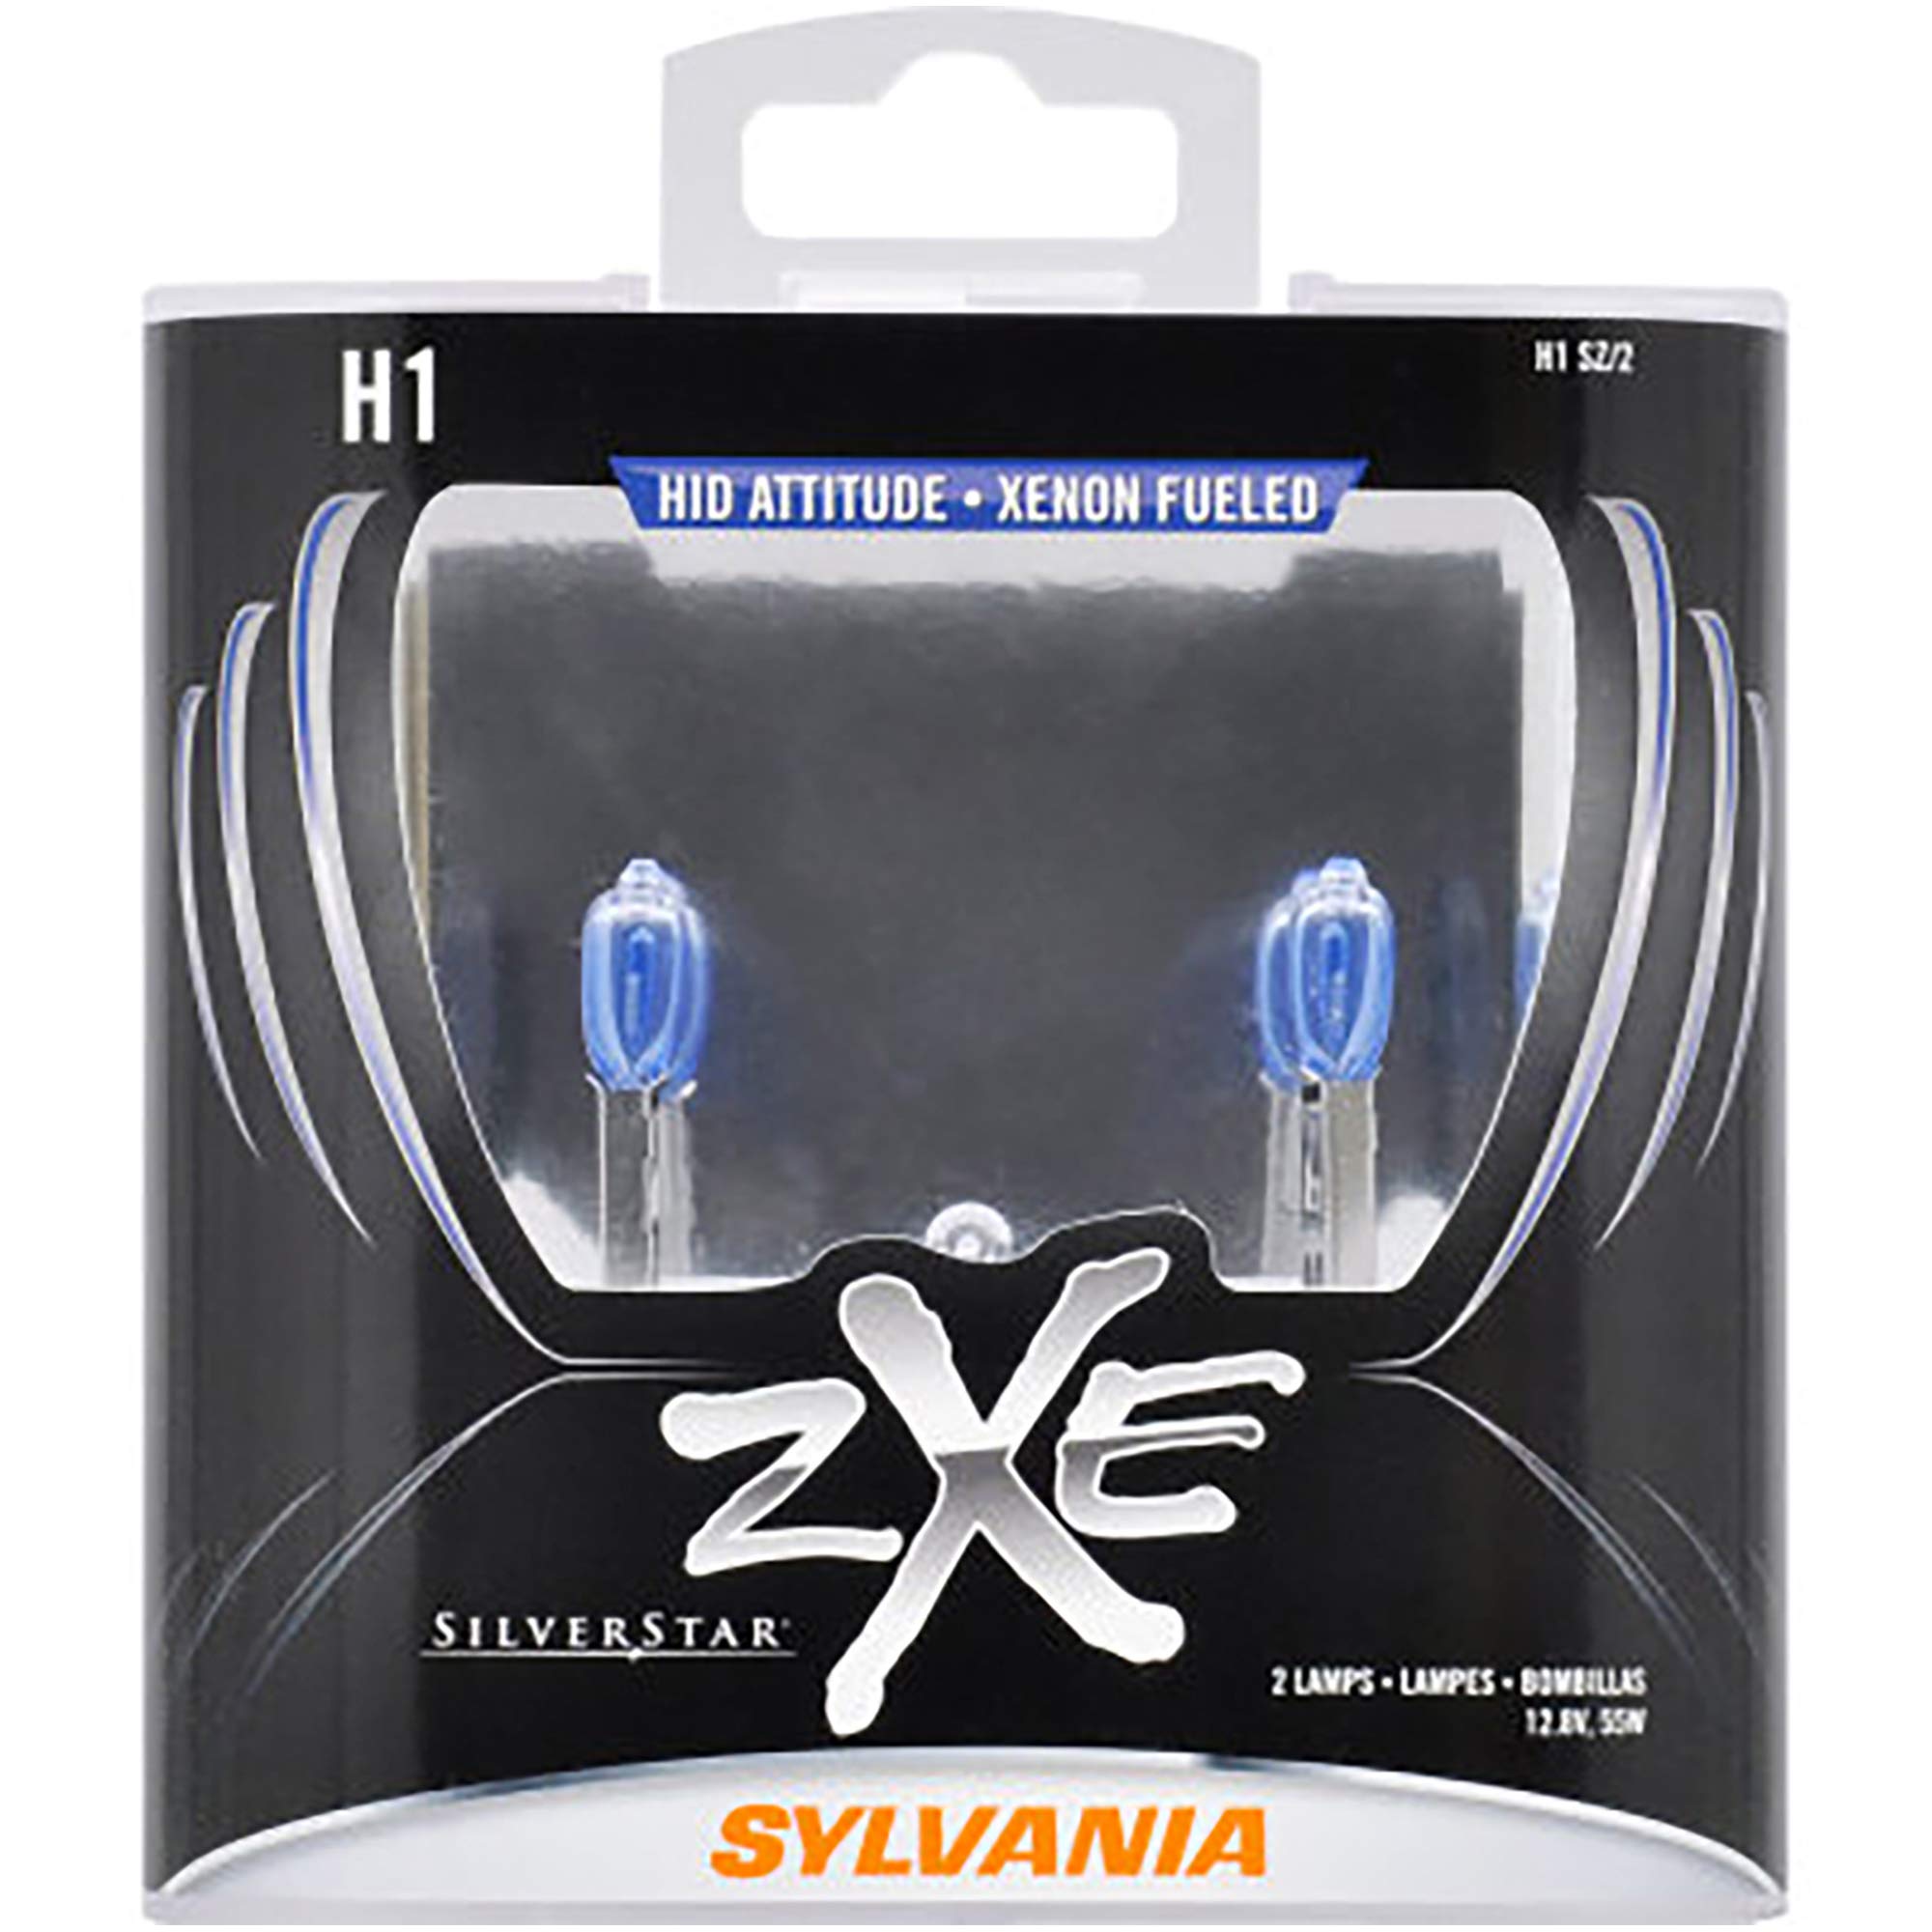 SYLVANIA H1 SilverStar zXe High Performance Halogen Headlight Bulb - 2-PK